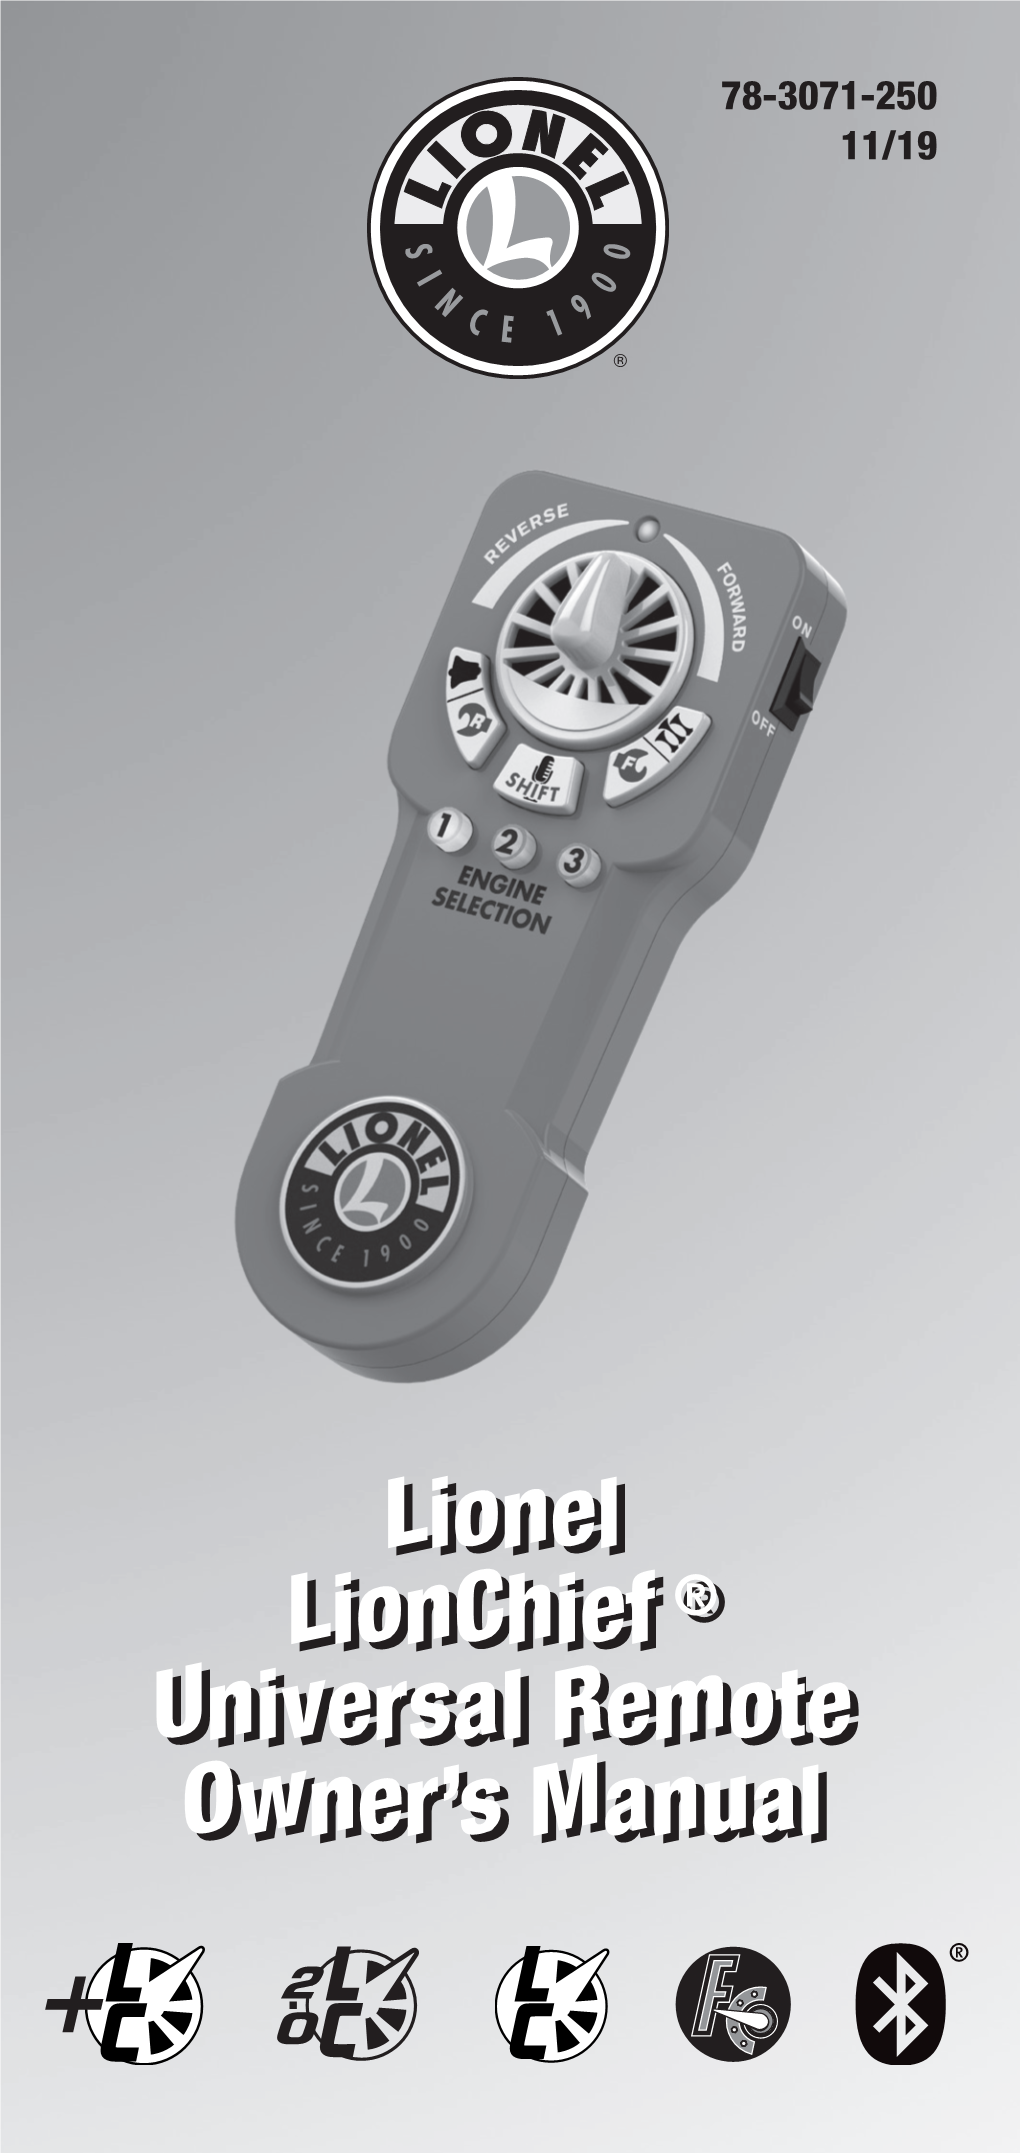 Universal Remote Owner's Manual Lionel Lionchief